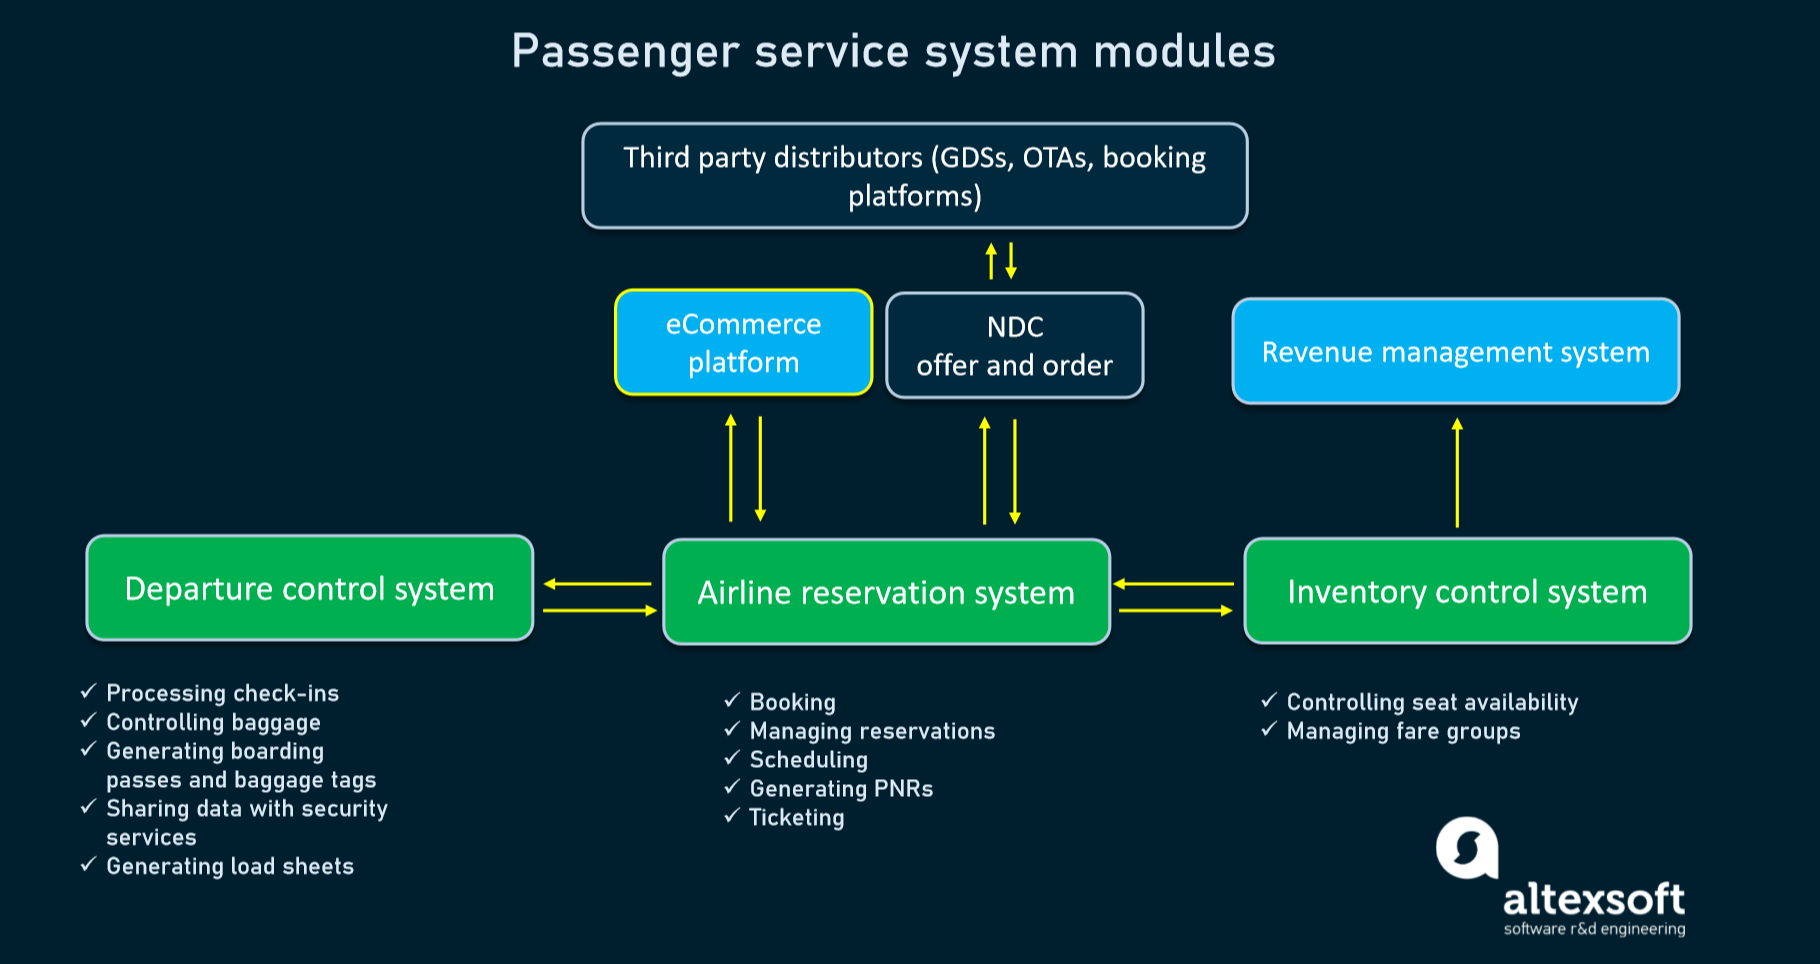 airline revenue management